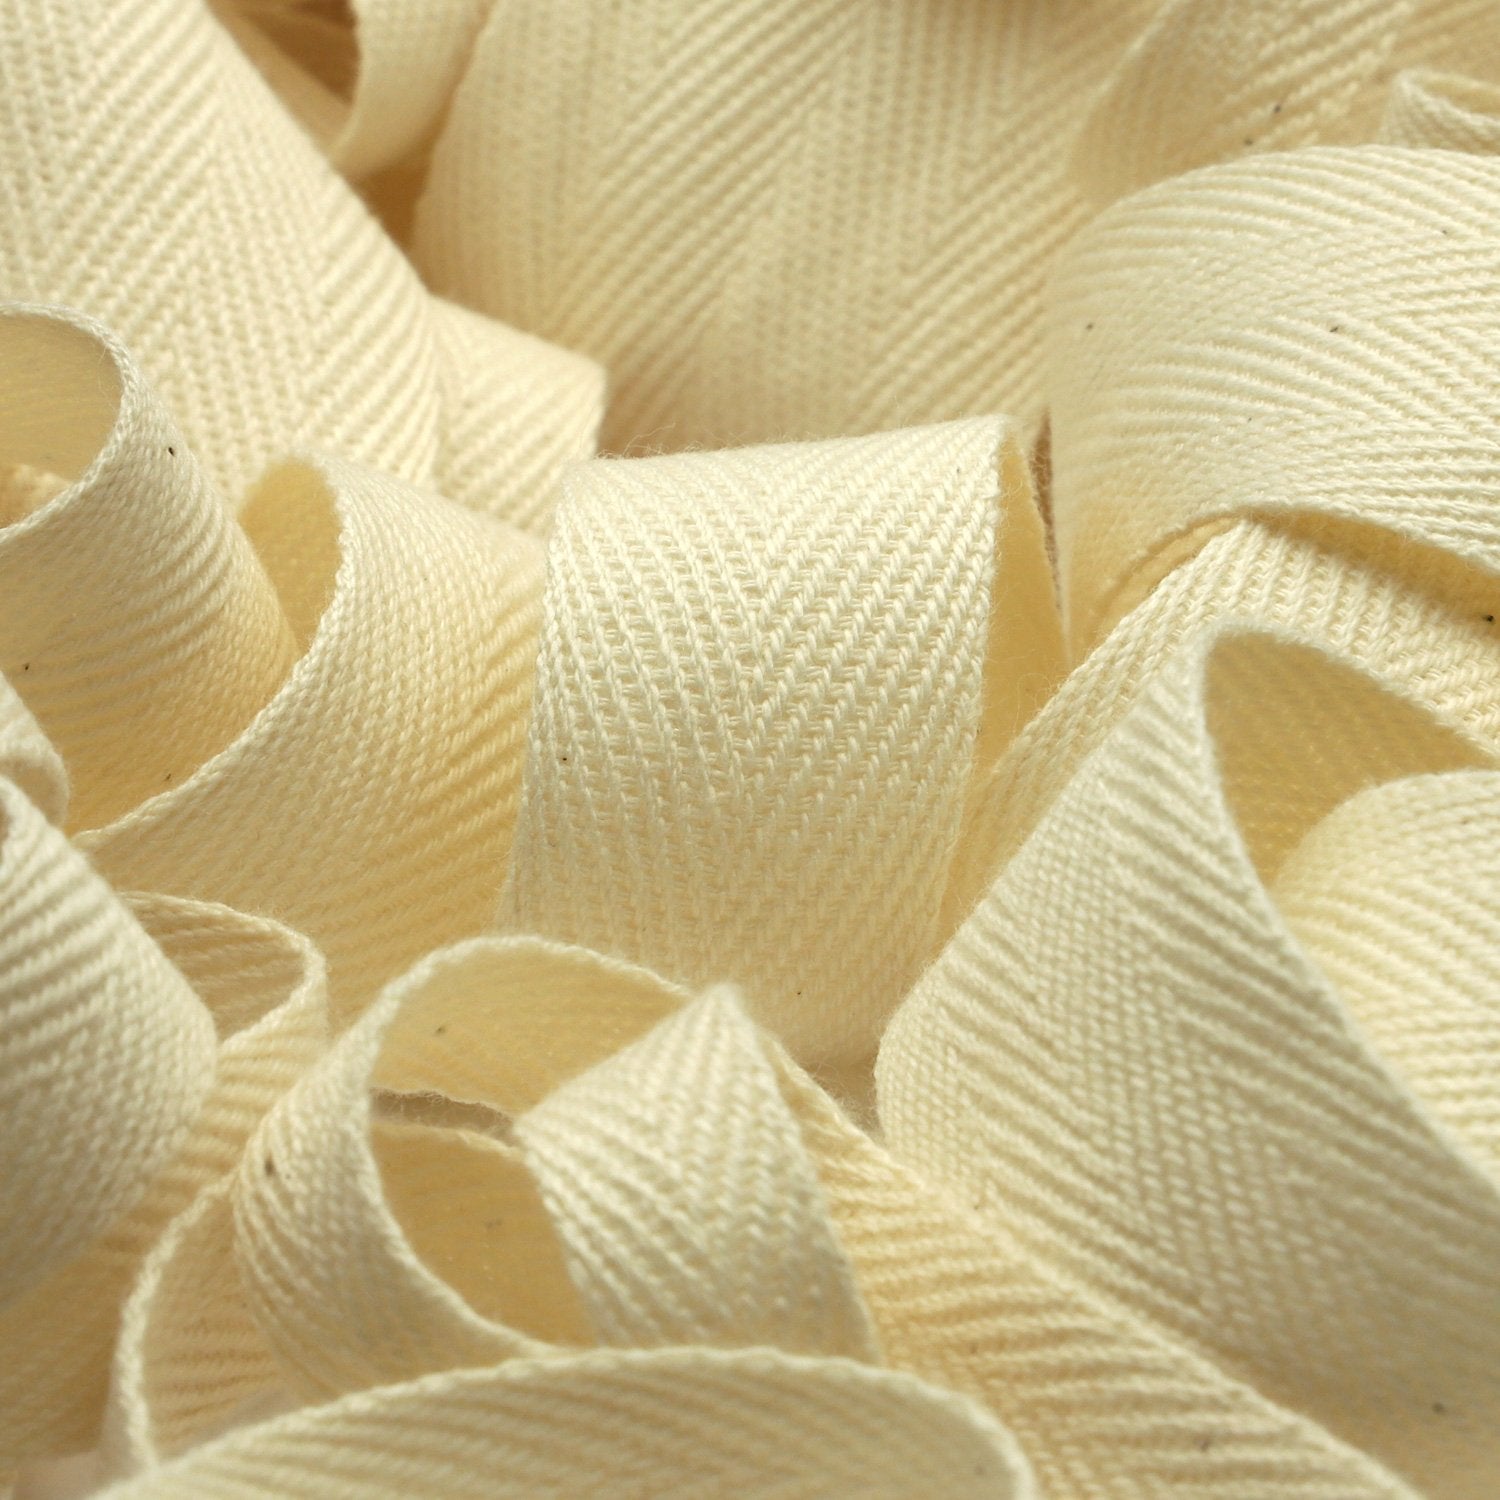 FUJIYAMA RIBBON [Wholesale] Organic Cotton Herringbone Ribbon 30mm Ecru 30 Meters Roll